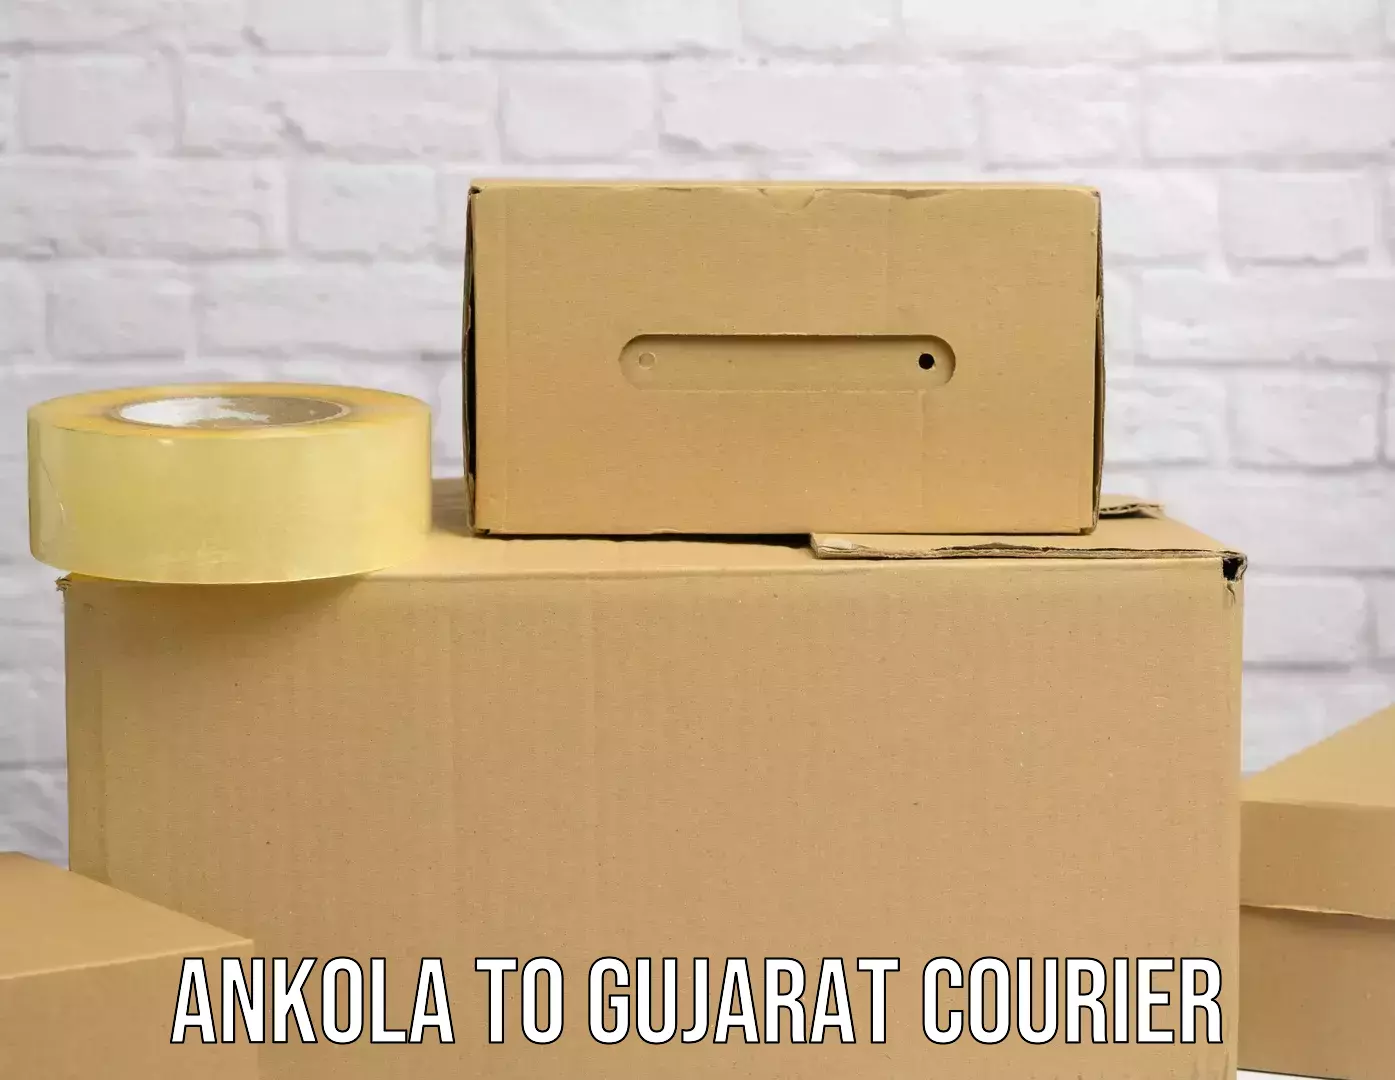 Digital courier platforms Ankola to Udhana